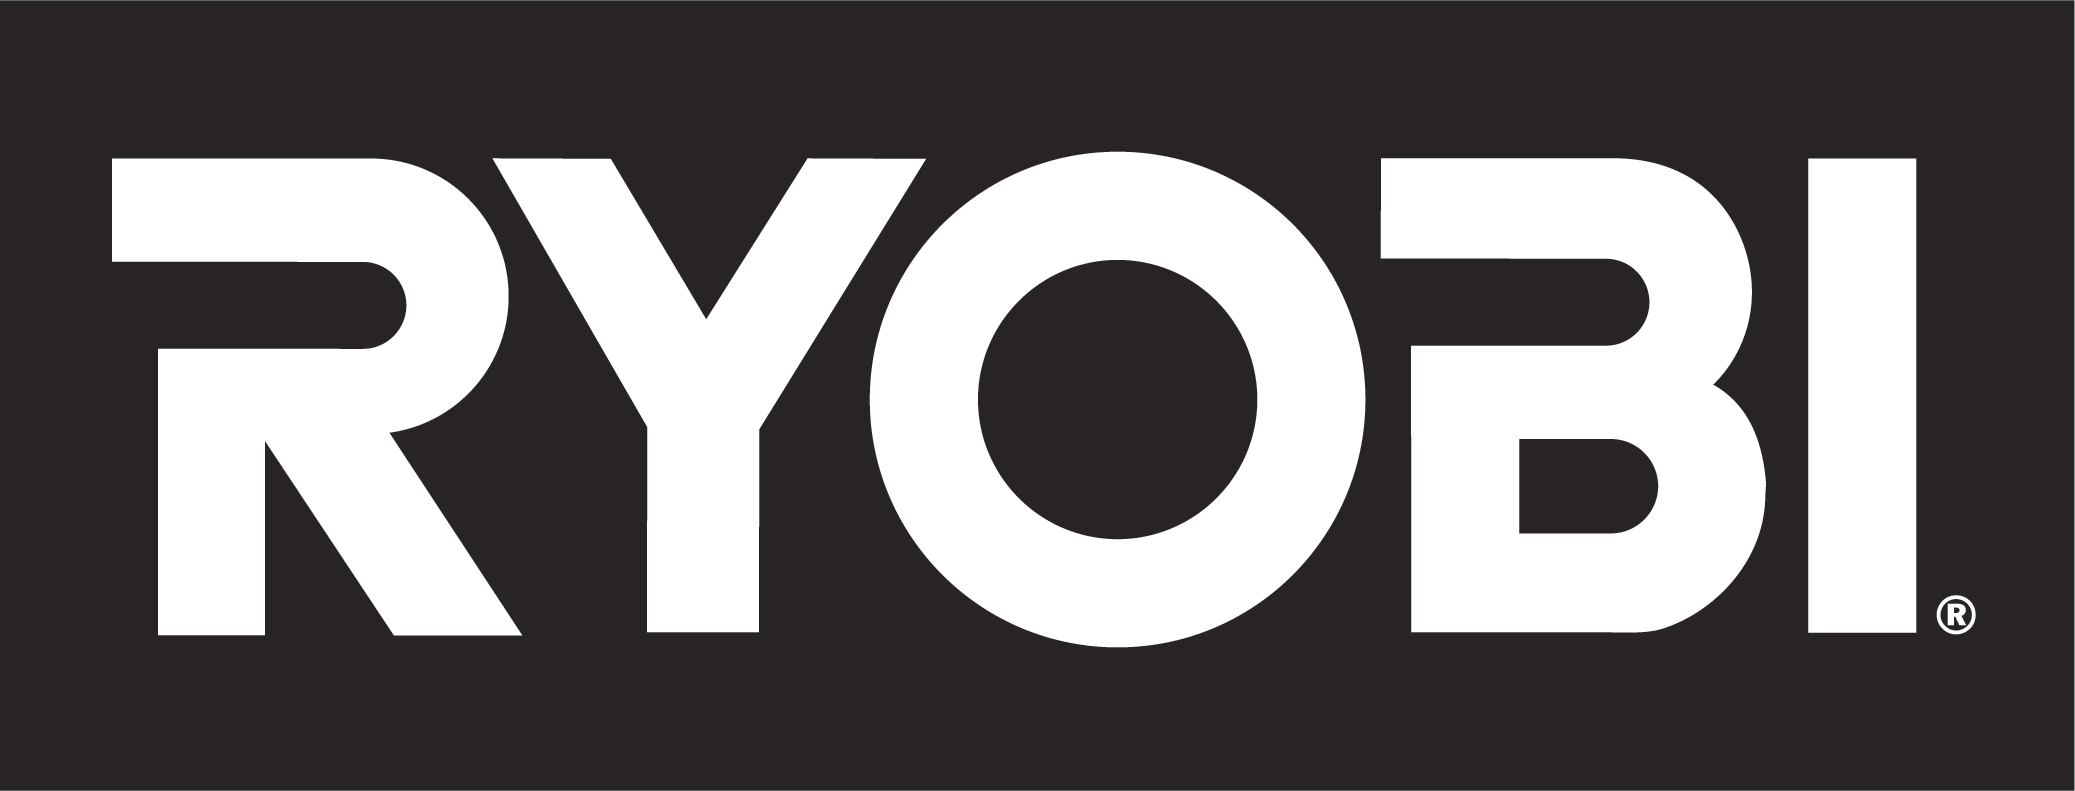 ryobi logo prodottiferramenta